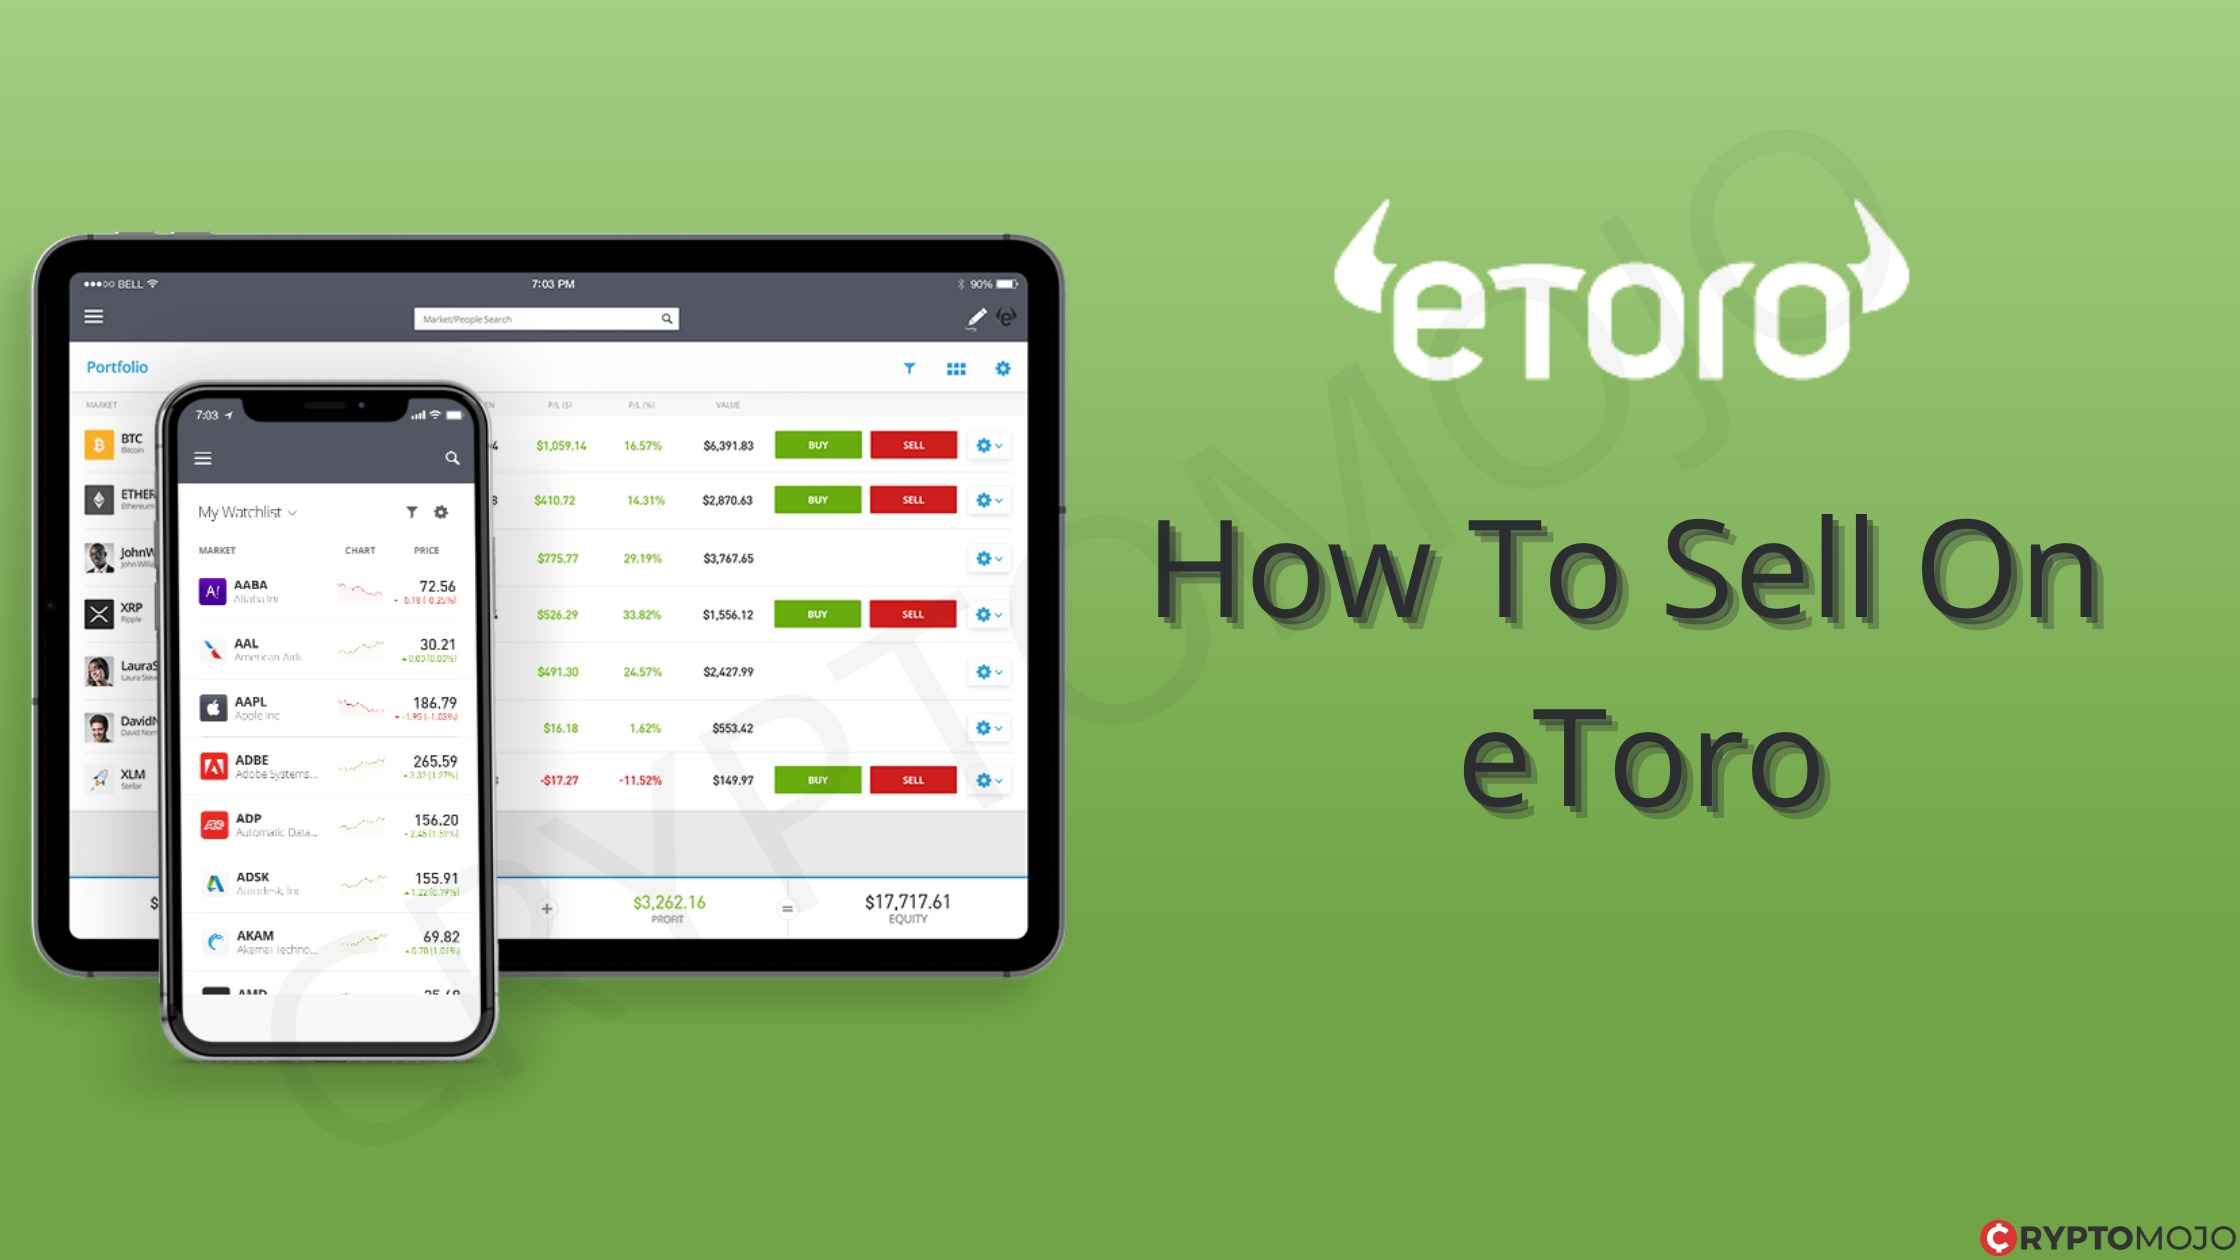 How To Sell On eToro